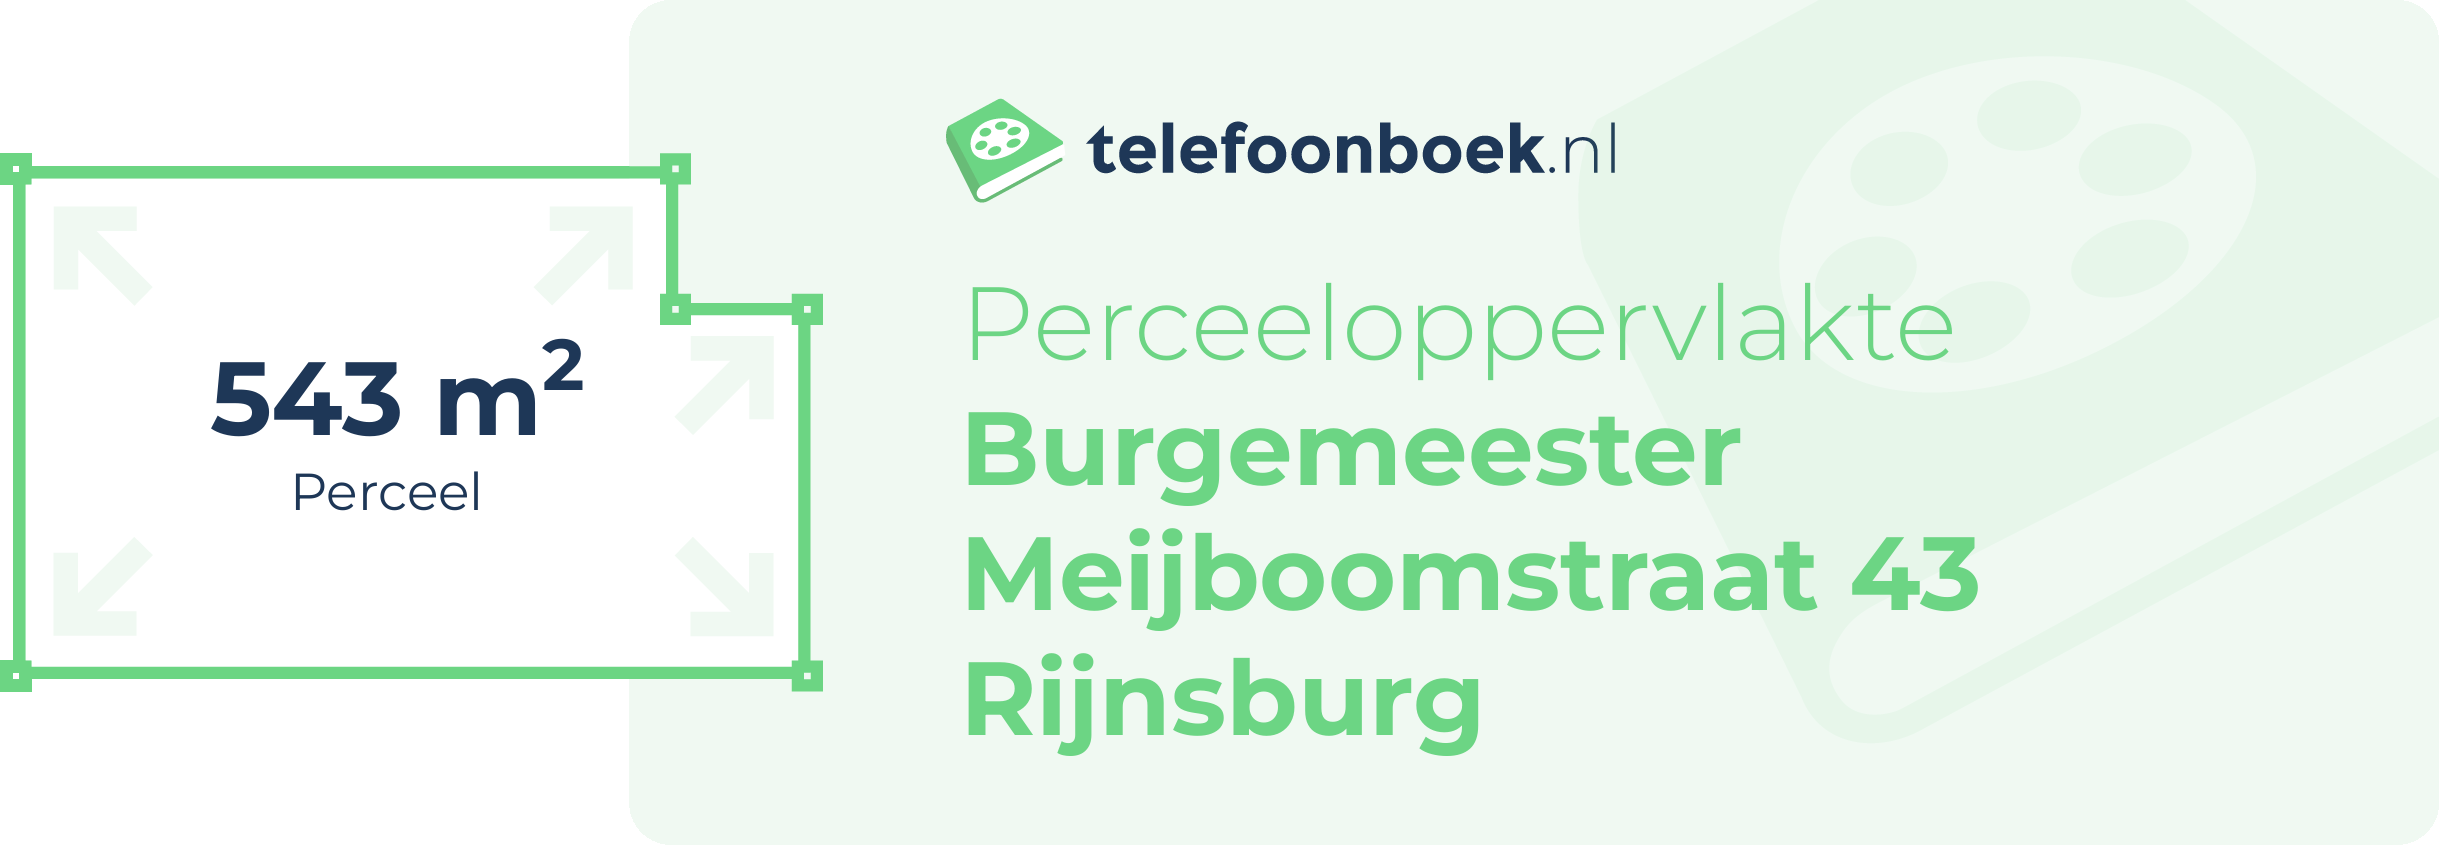 Perceeloppervlakte Burgemeester Meijboomstraat 43 Rijnsburg